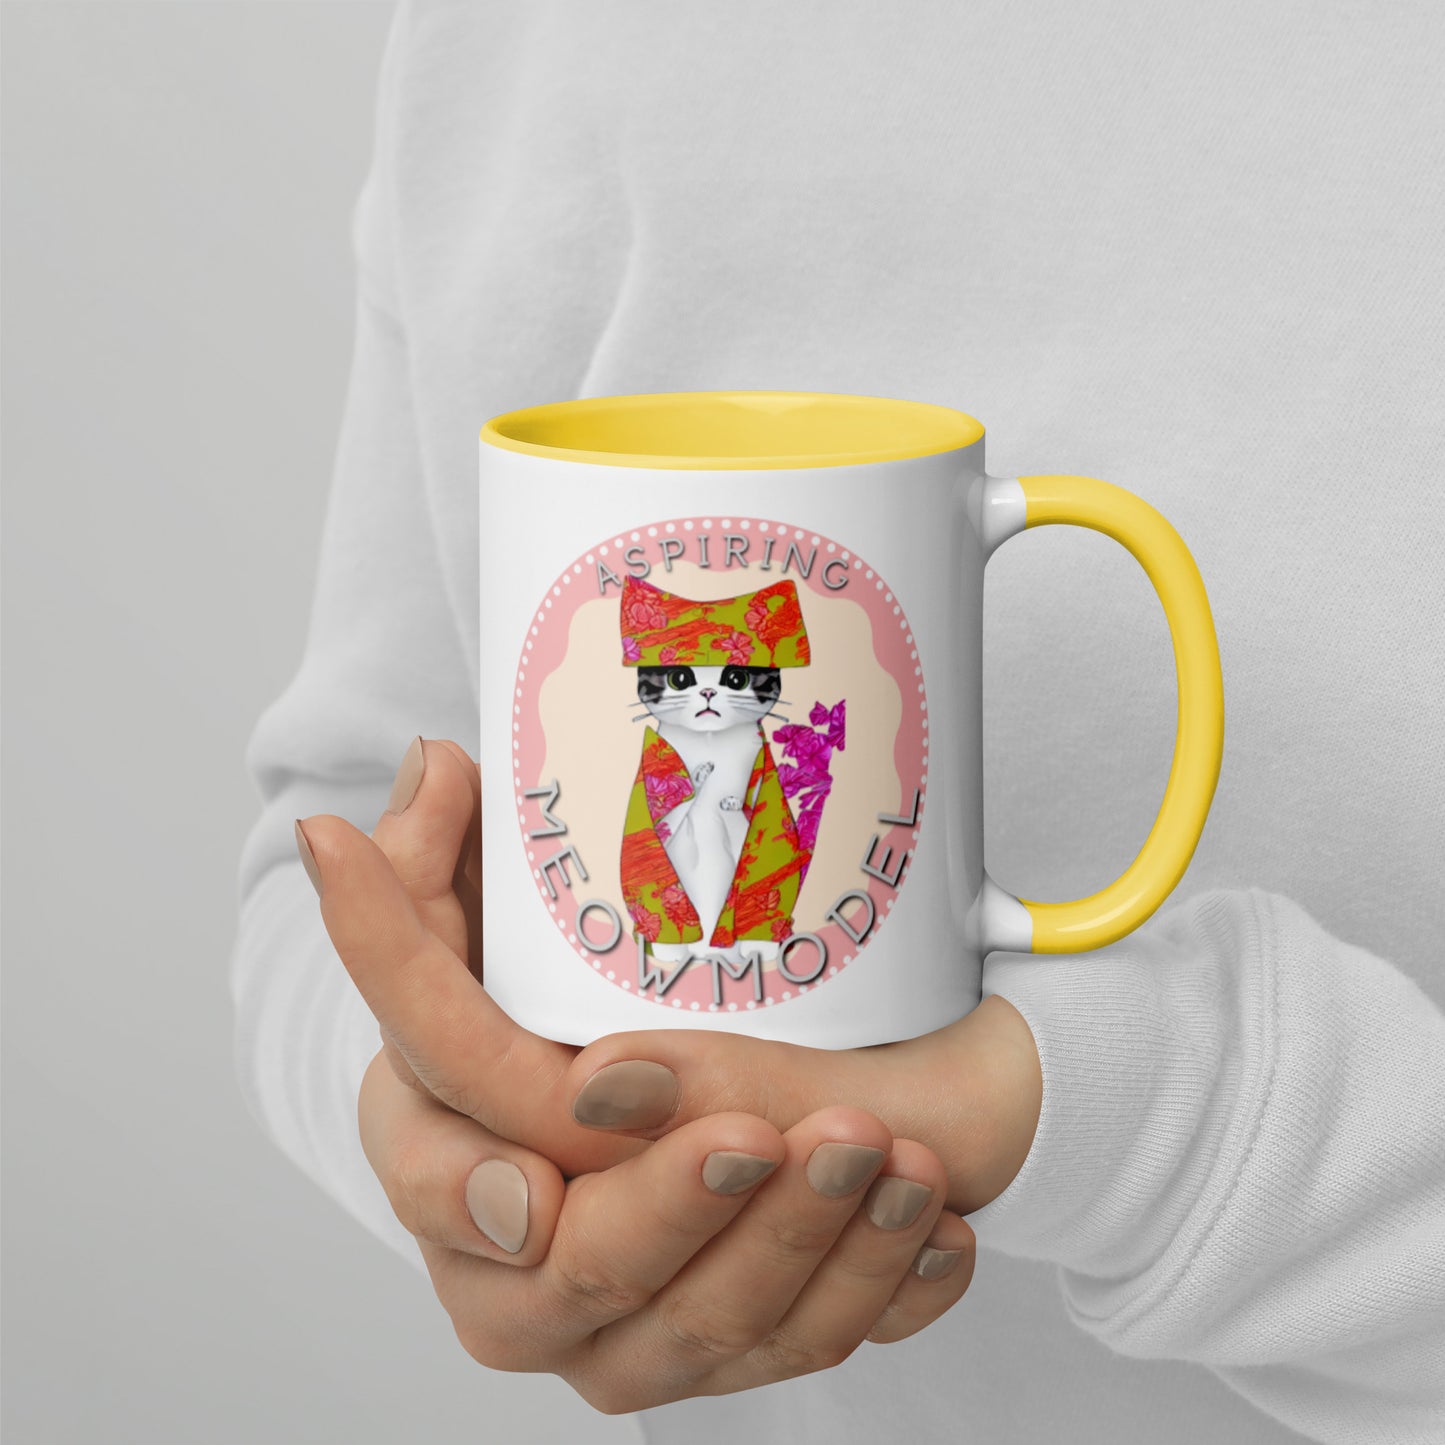 Colorful "Aspiring Meowmodel" Mug